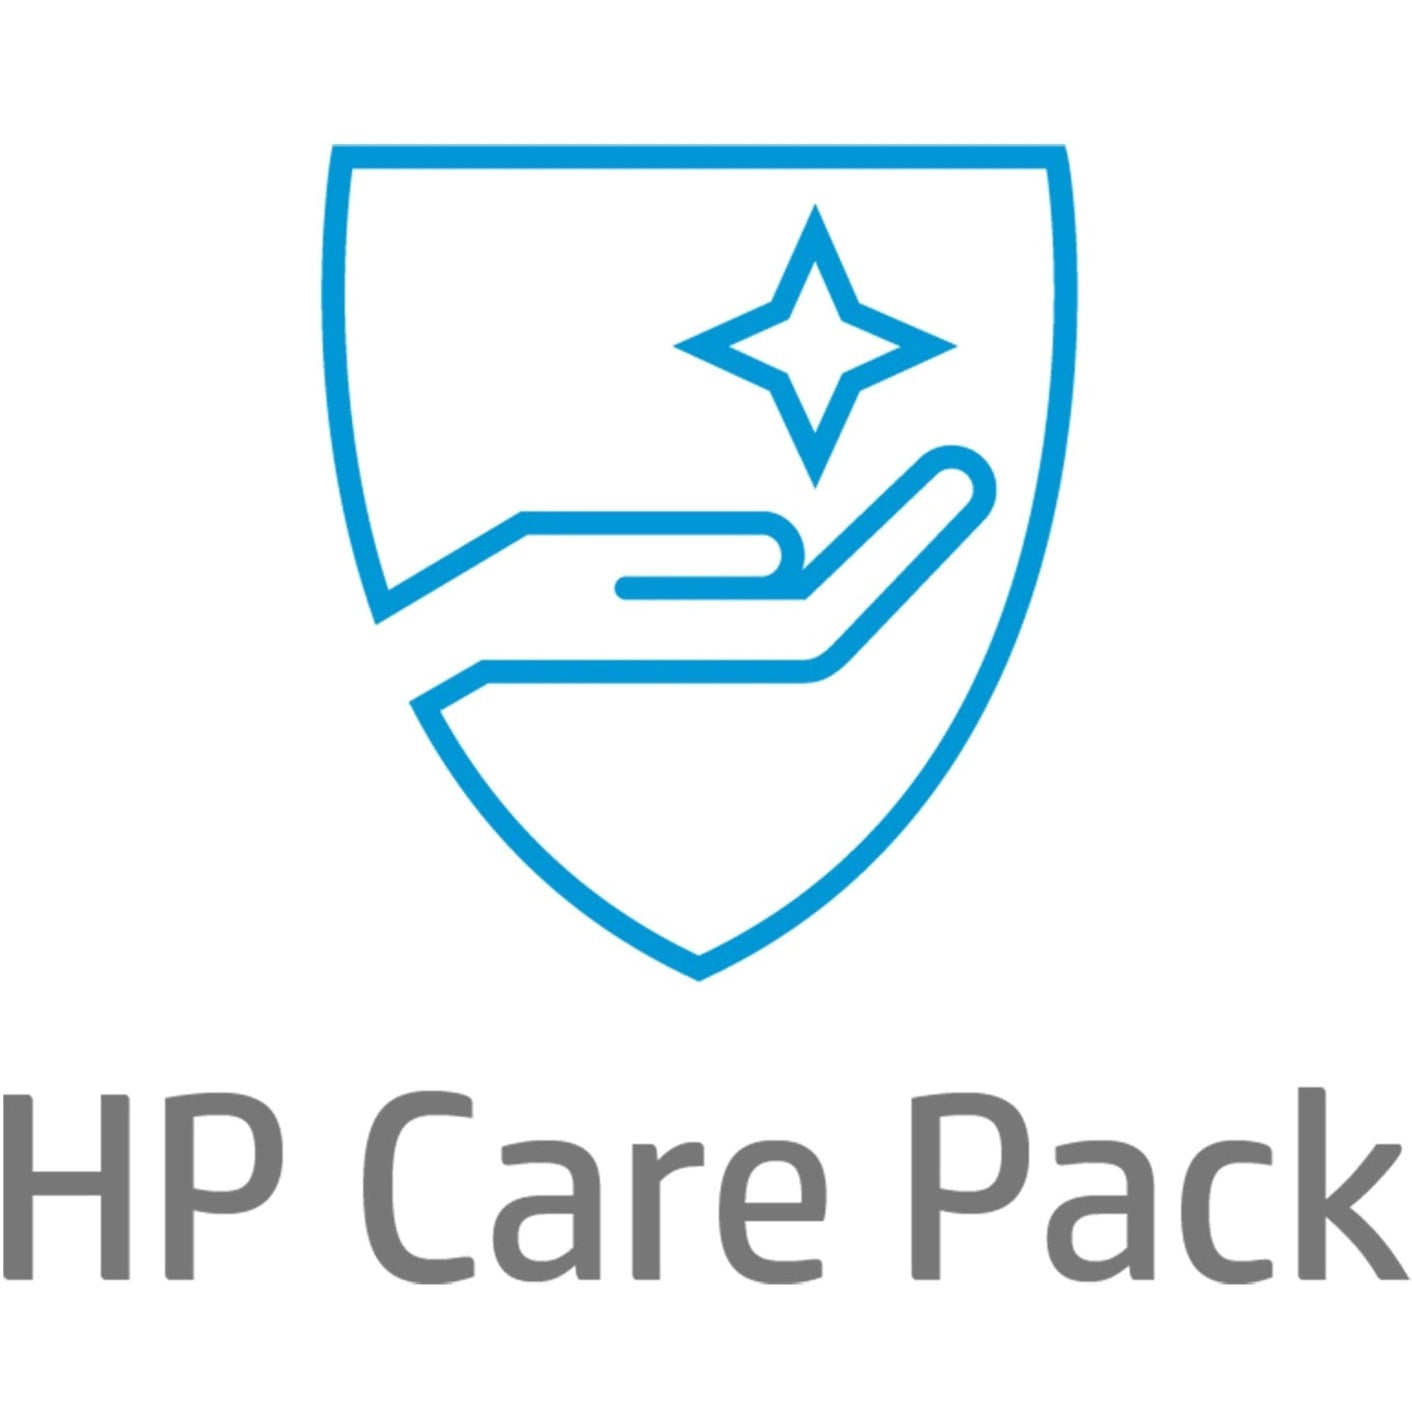 HP Care Pack - 2 Year - Service - Technical (UQ873E)